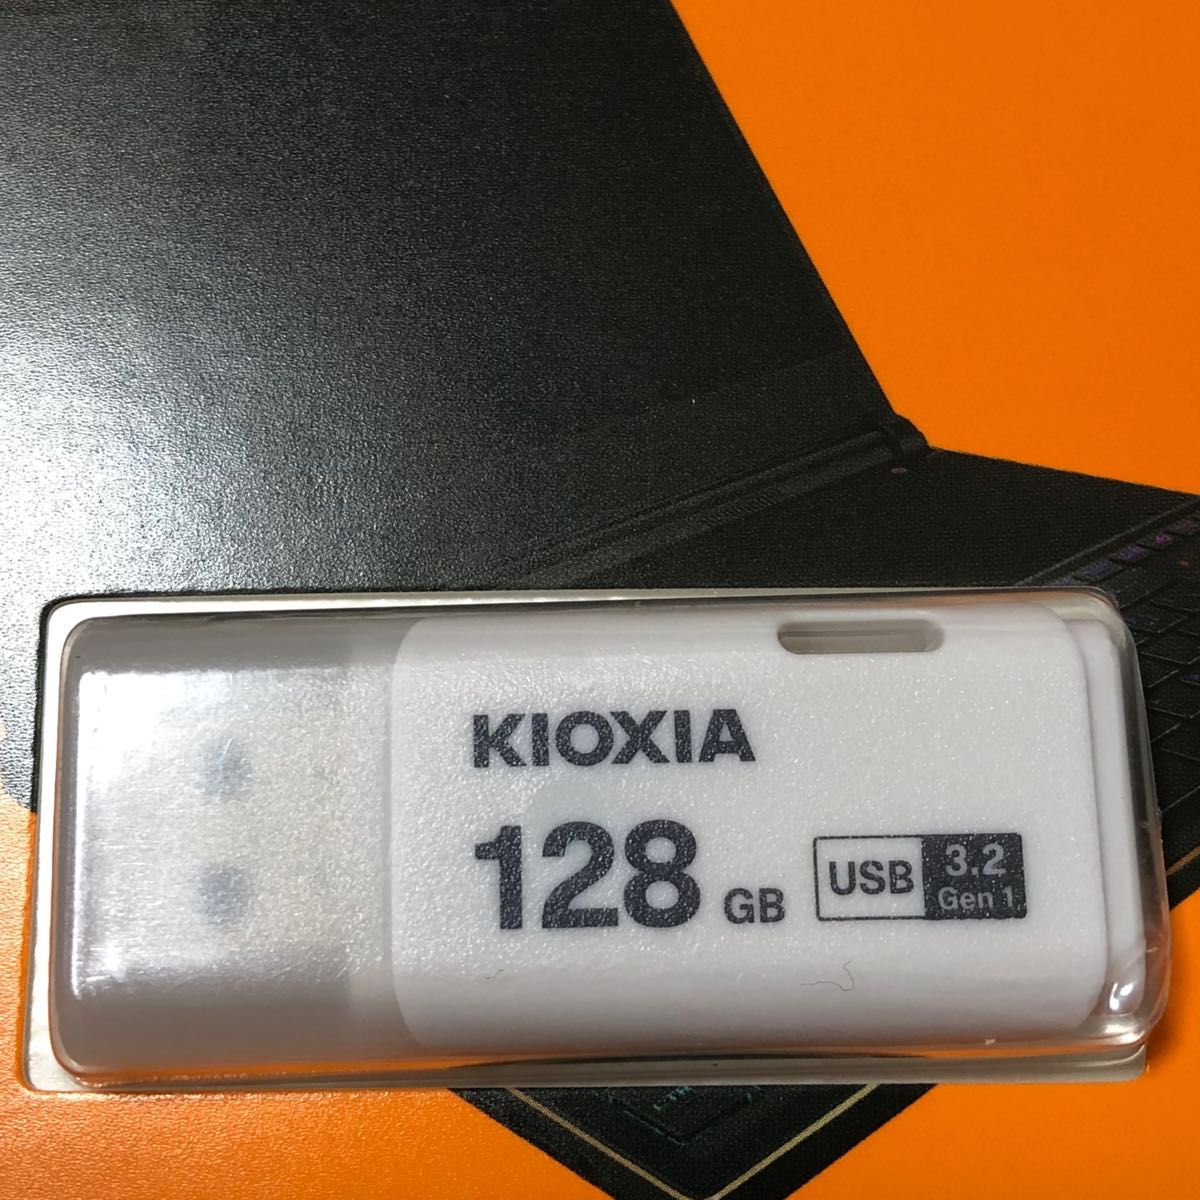 USBフラッシュメモリ 128GB USB 3.2 Gen 1 KIOXIA キオクシア 東芝 TOSHIBA USBメモリ